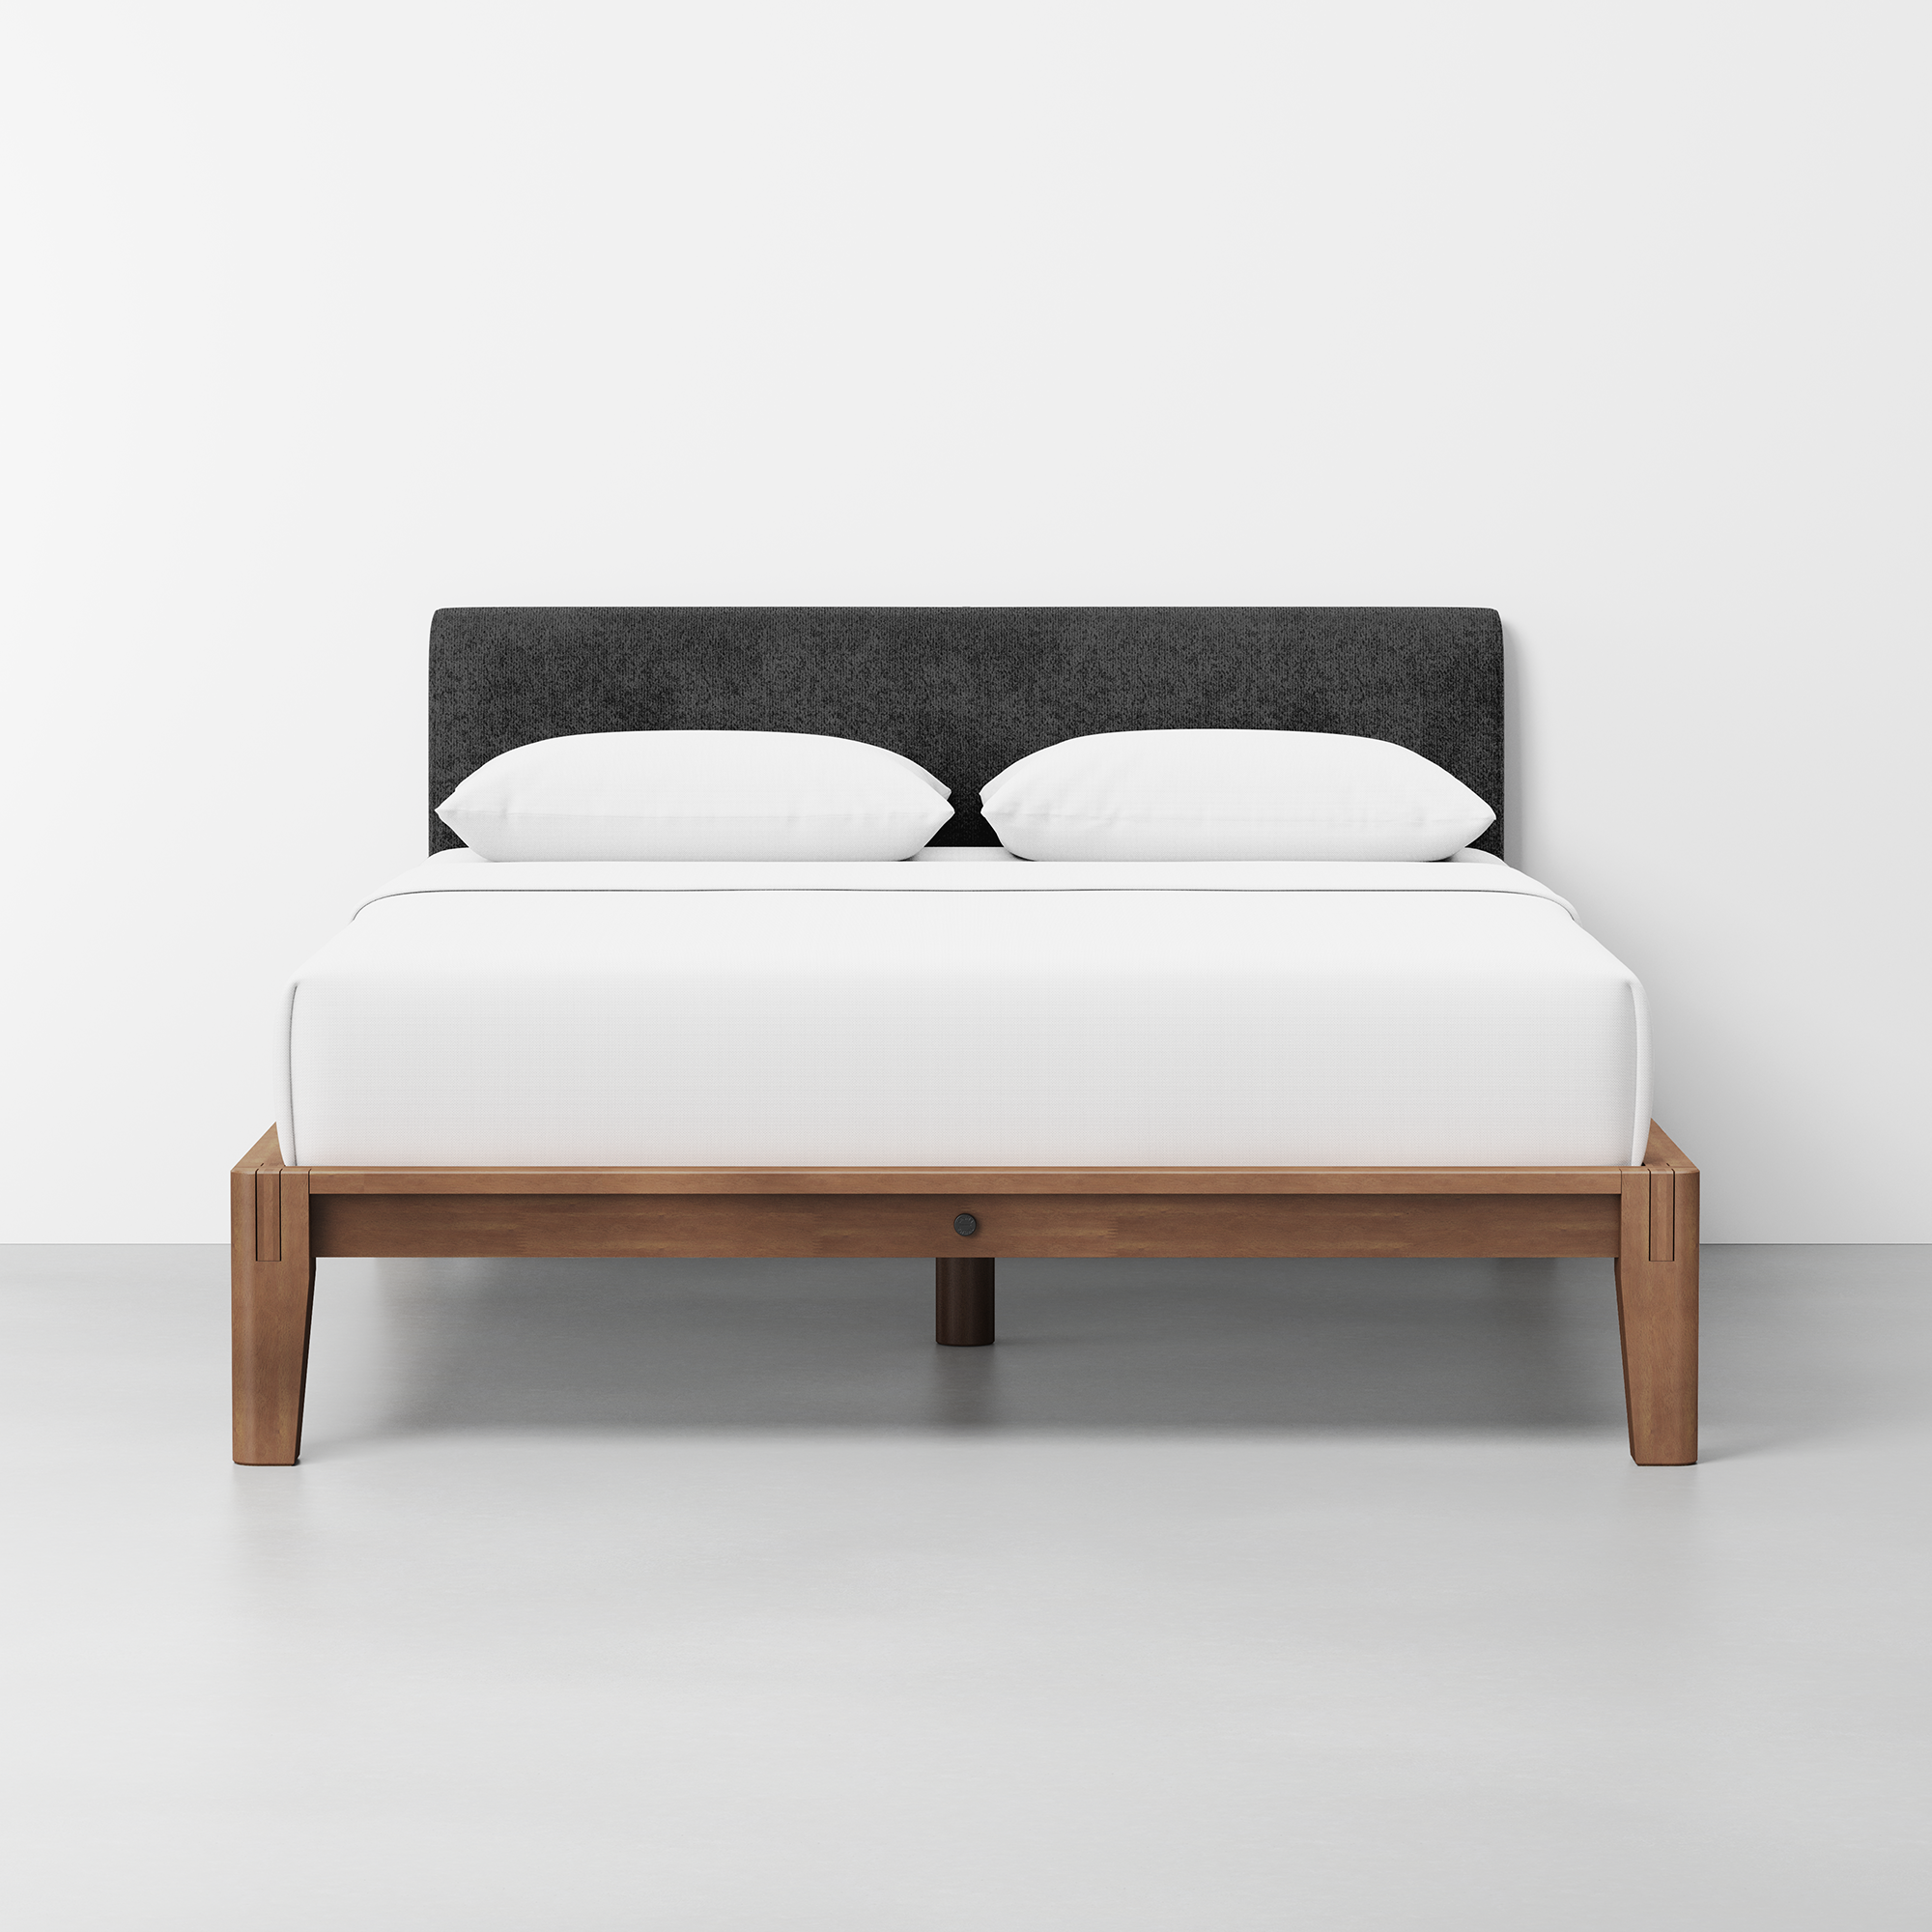 The Bed (Walnut / Graphite) - Render - Front